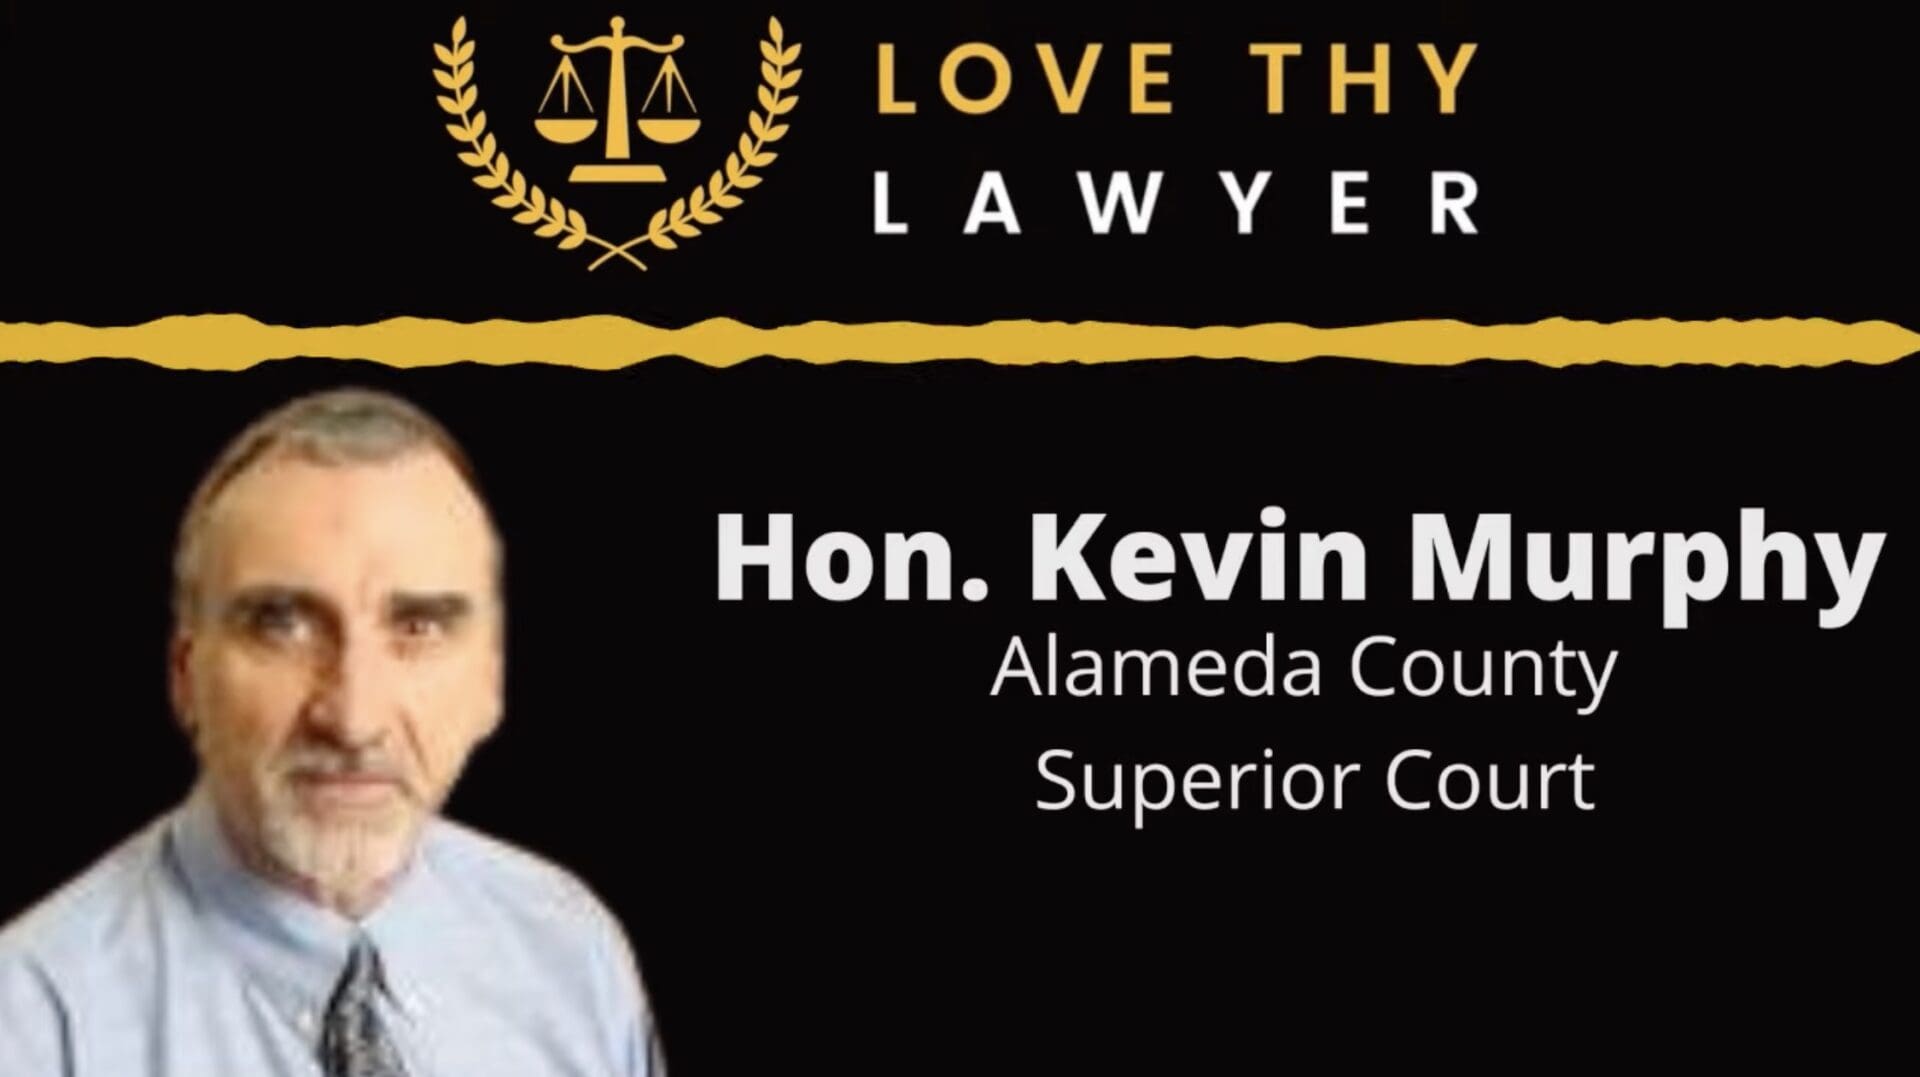 Judge Kevin Murphy